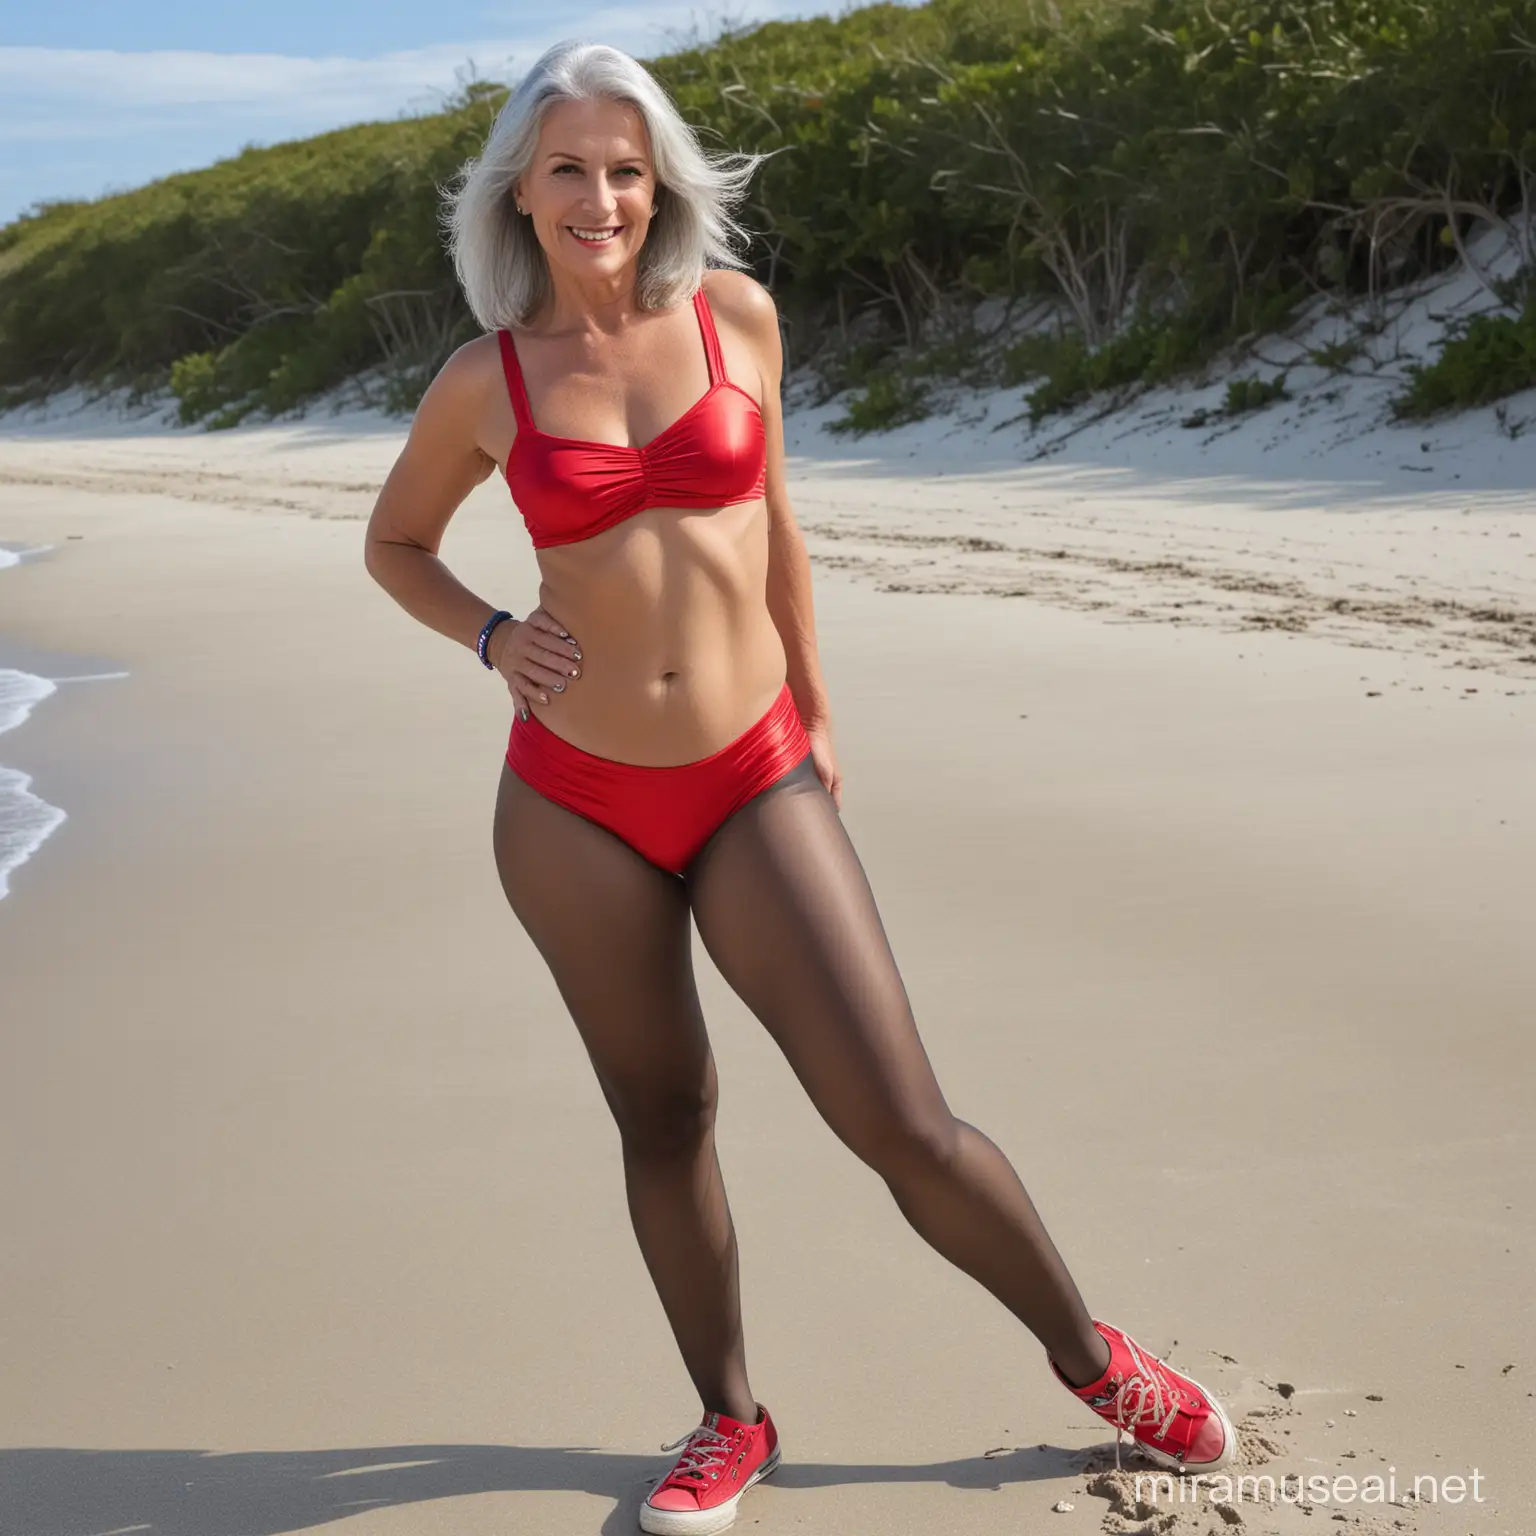 mature lady 55 years old, silver hair, shiny black pantyhose, denim jean shorts, red bikini top on sandy Florida beach, pantyhose, blue converse sneakers